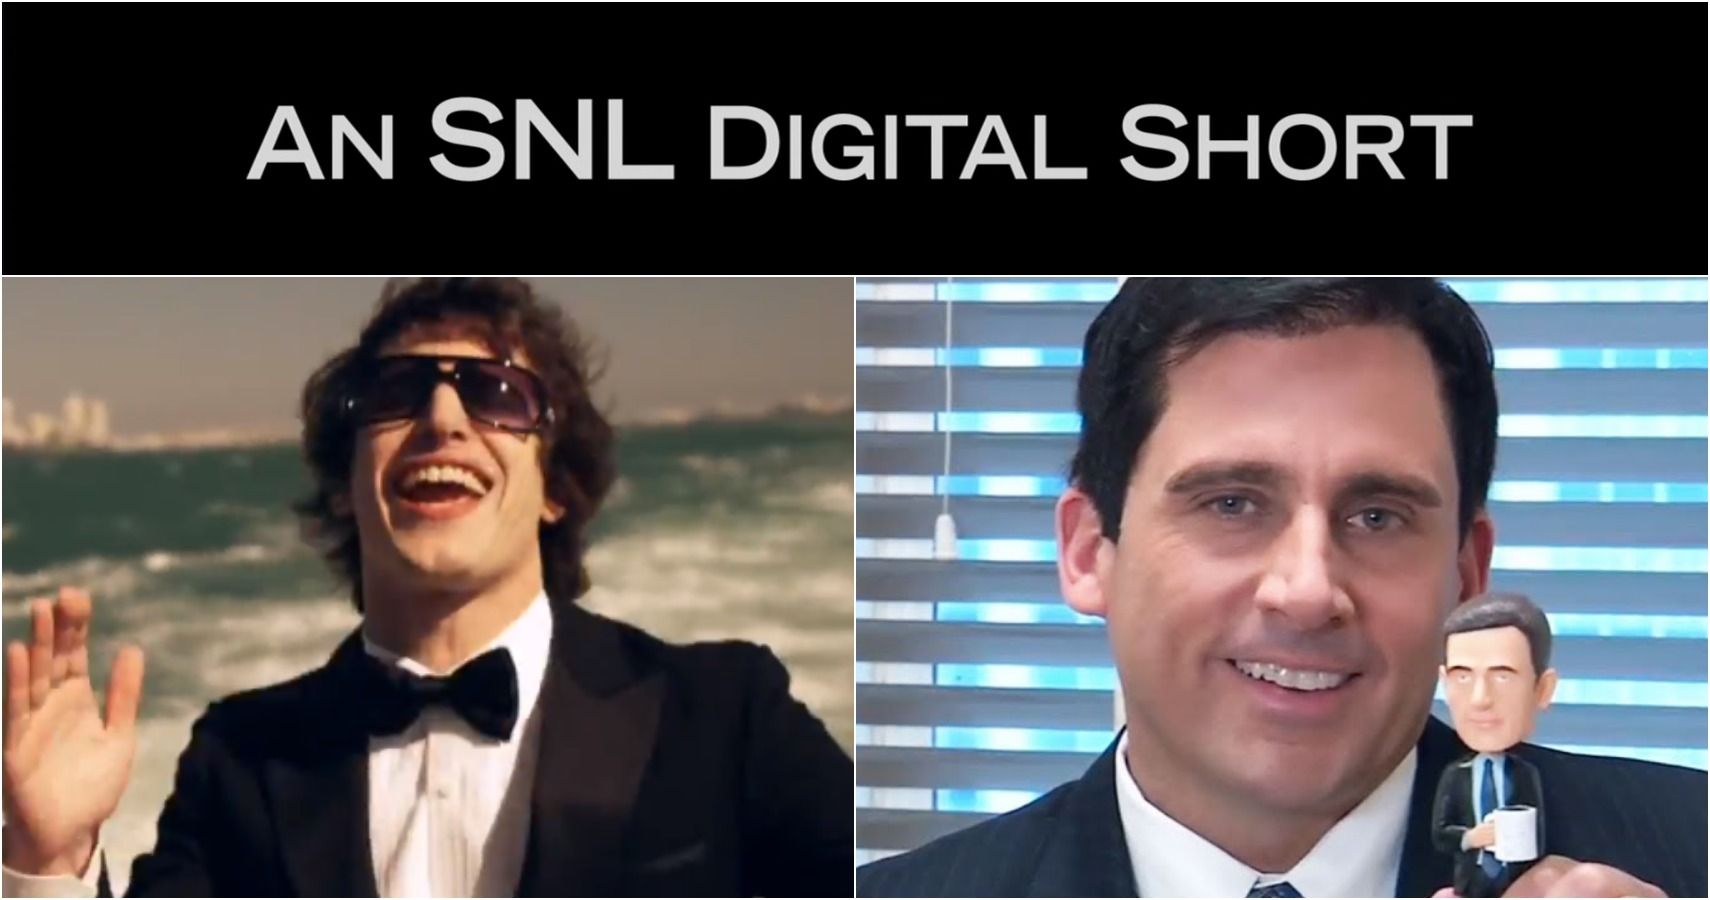 Saturday Night Live Top 10 Best SNL Digital Shorts